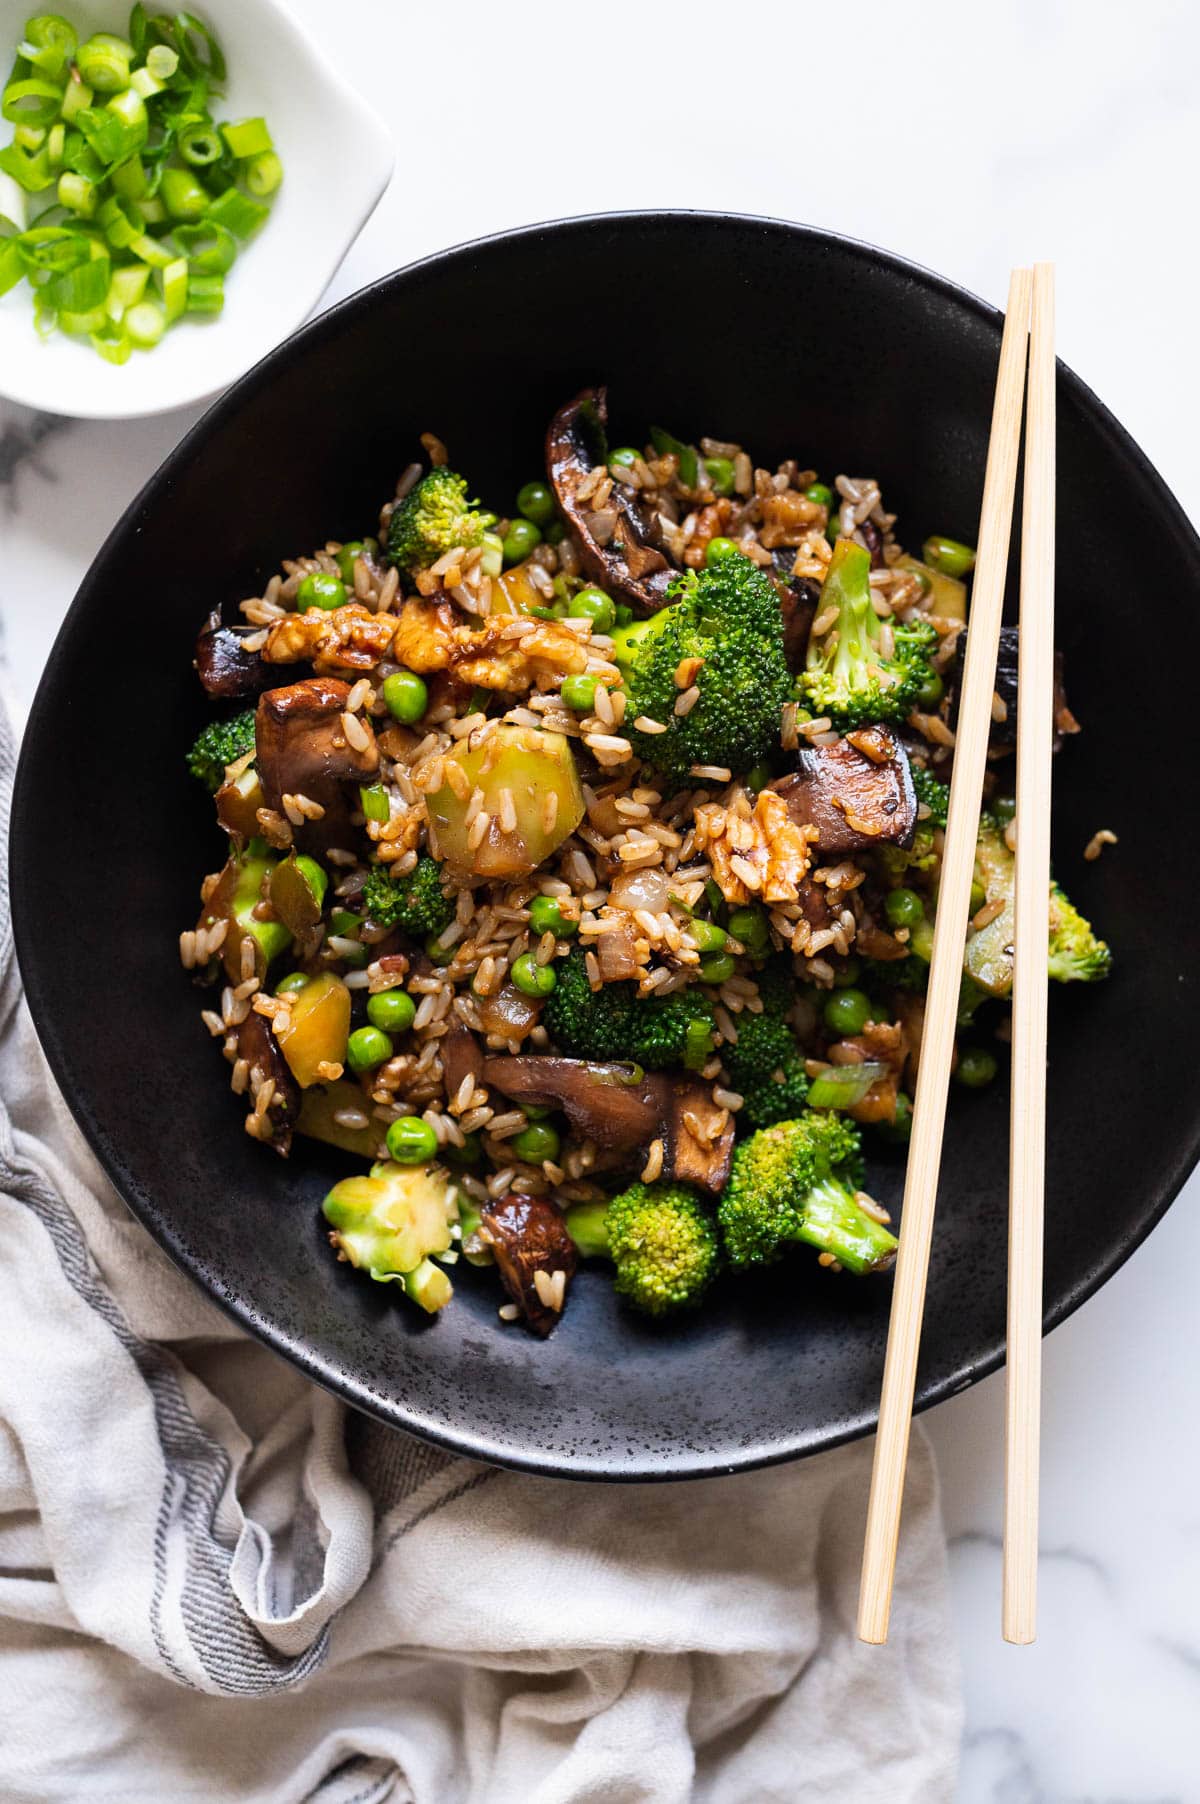 Broccoli mushroom stir fry served in a black bowl with chopsticks.